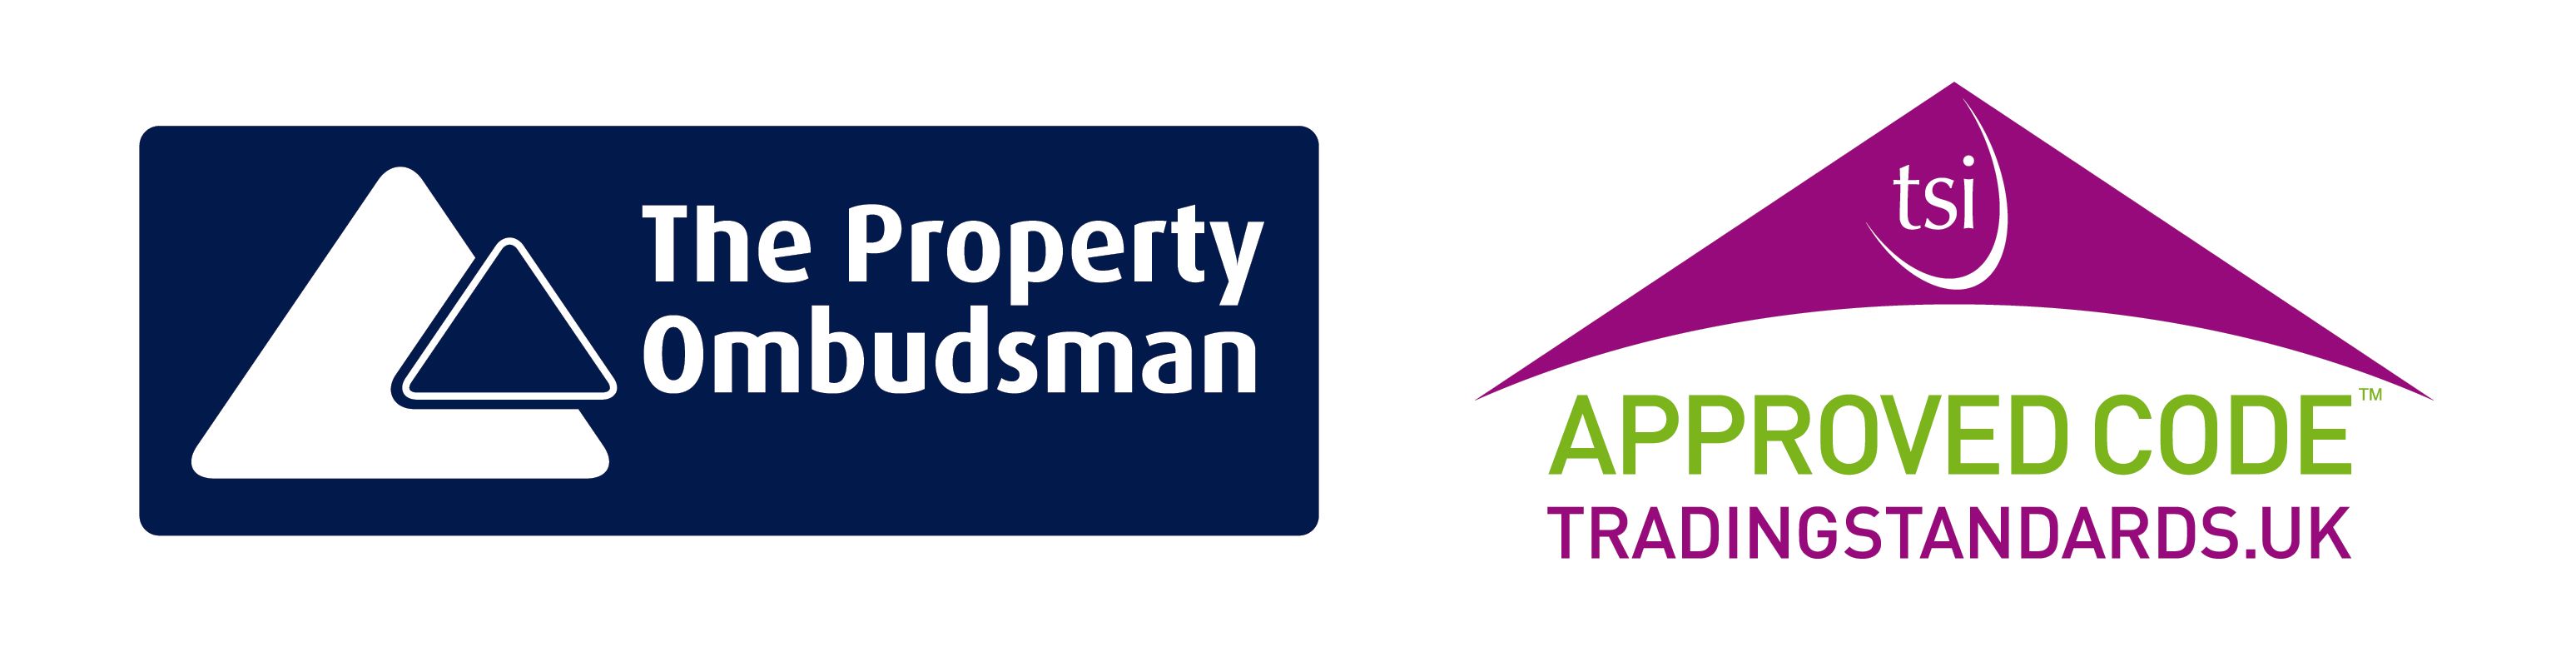 Property Ombudsman Certificate certificate logo